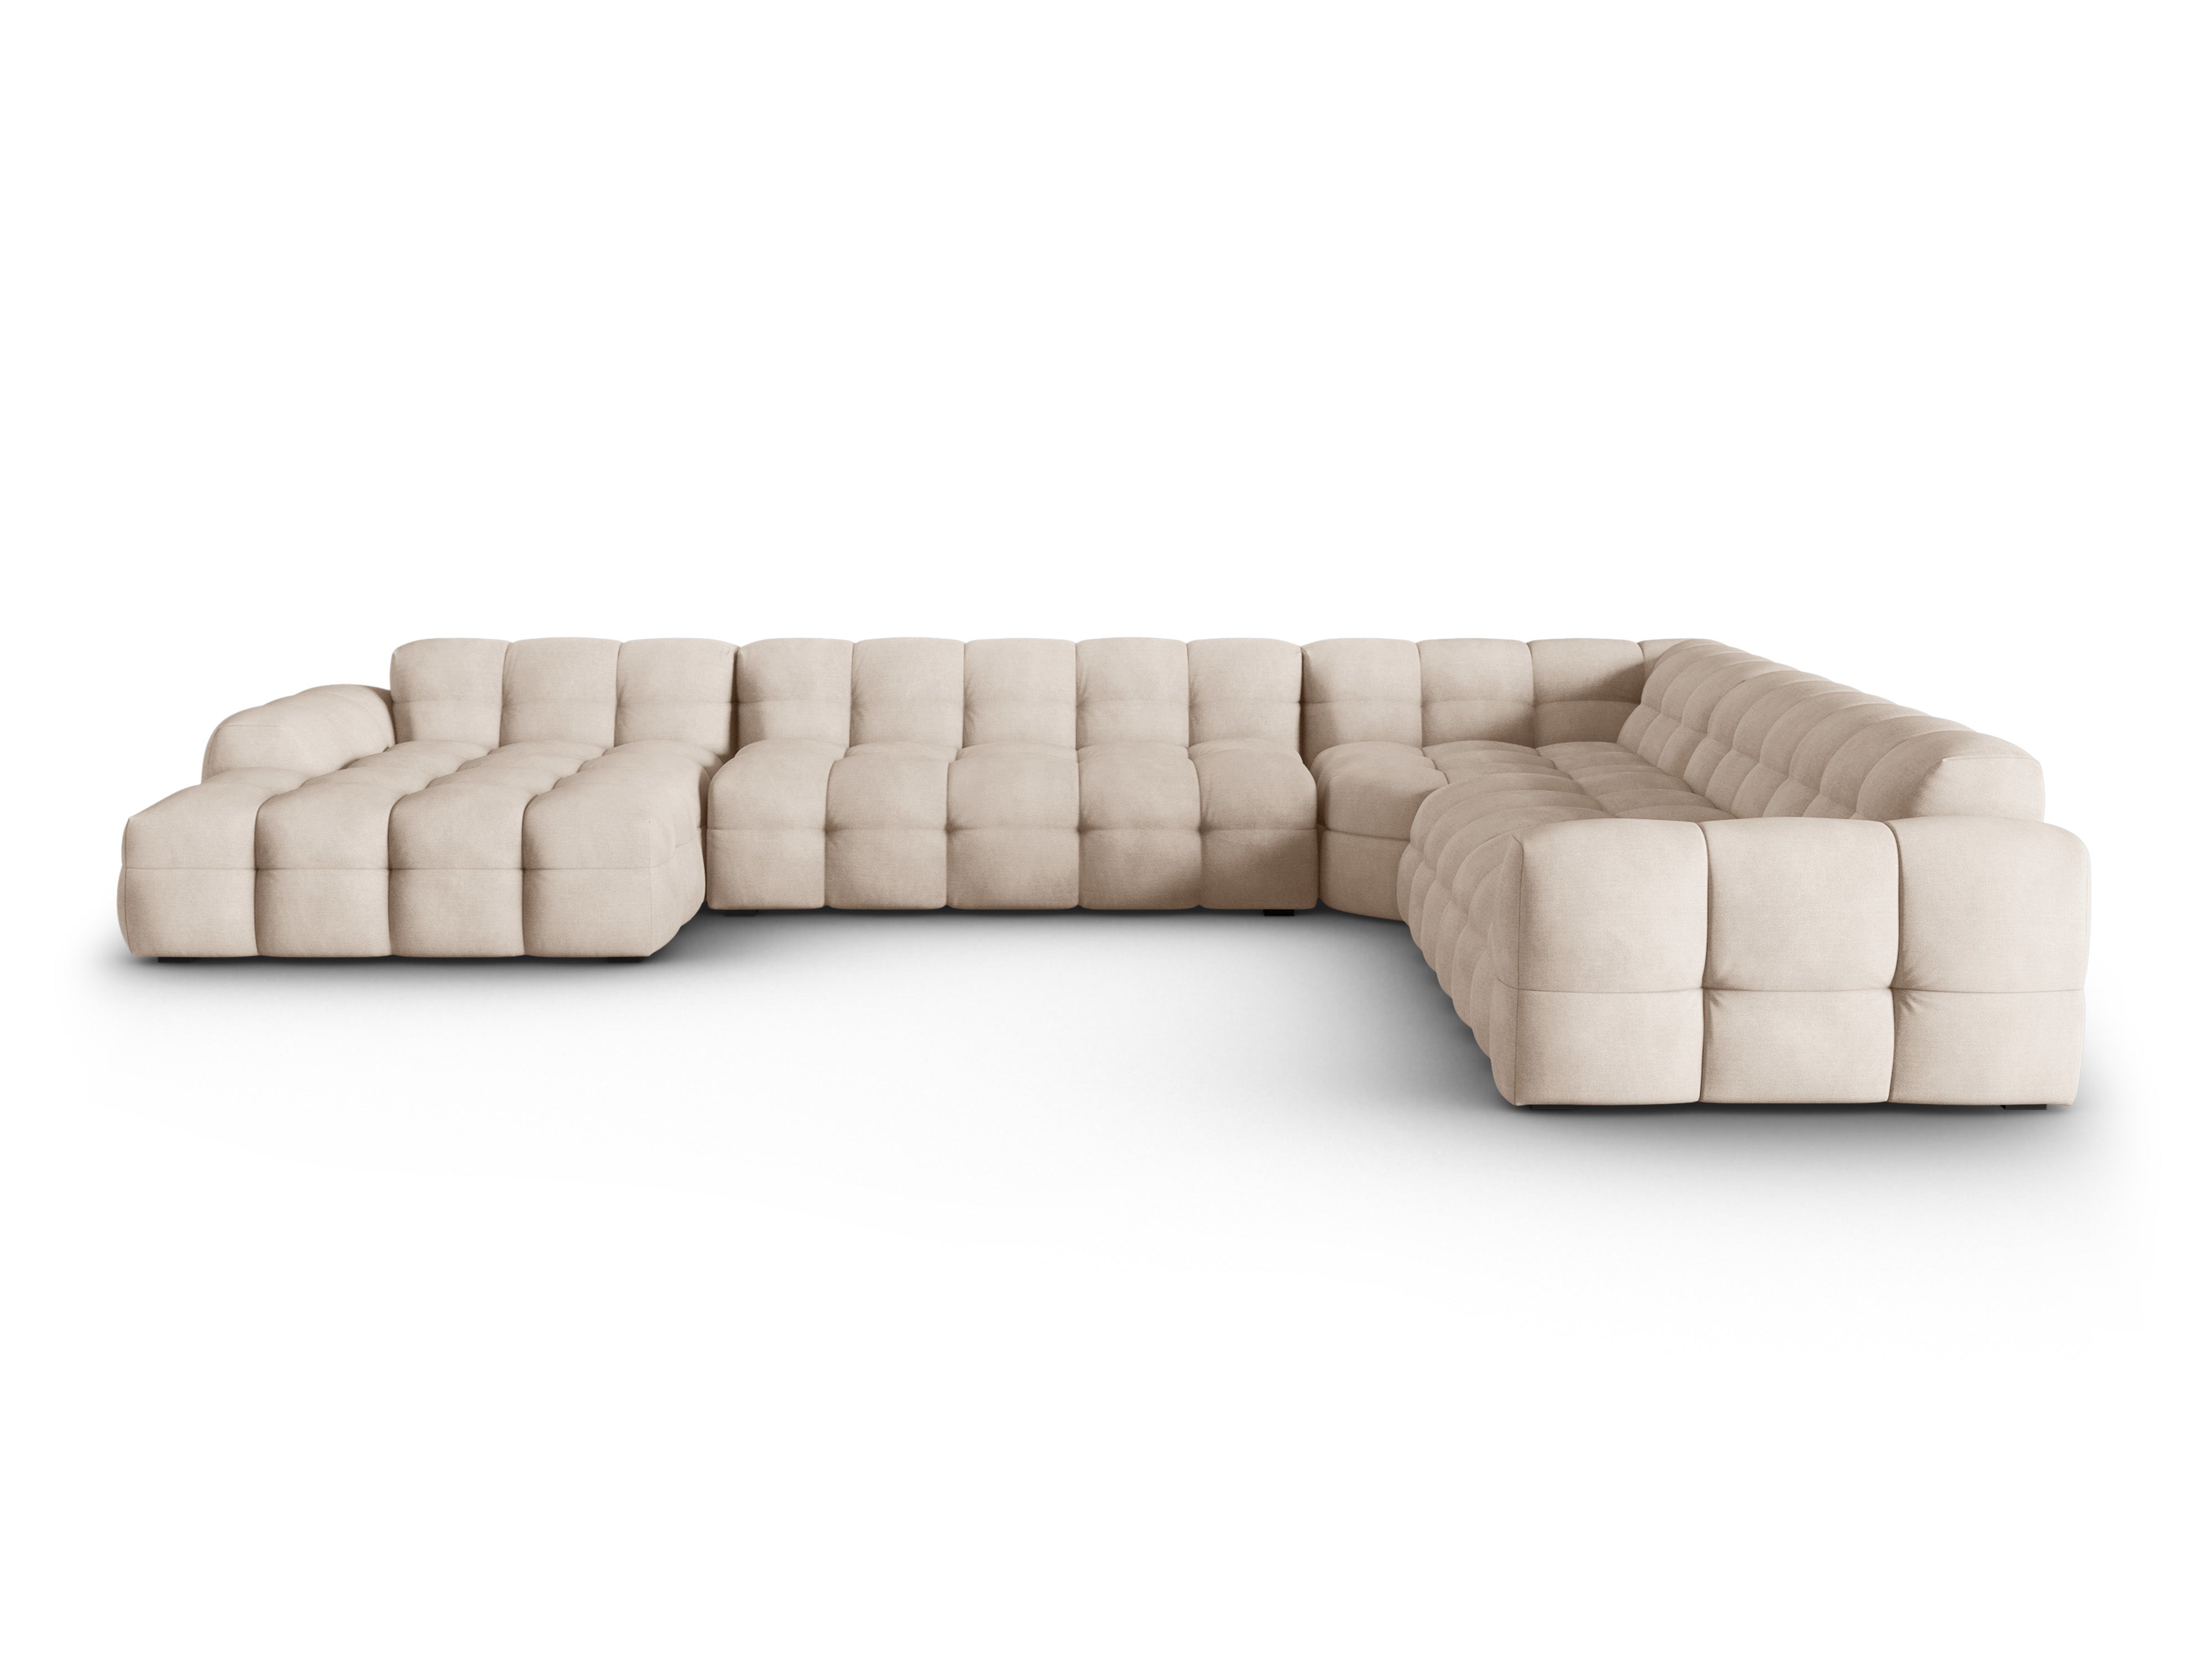 Panoramic Right Corner Sofa, "Nino", 7 Seats, 378x322x68
Made in Europe, Maison Heritage, Eye on Design